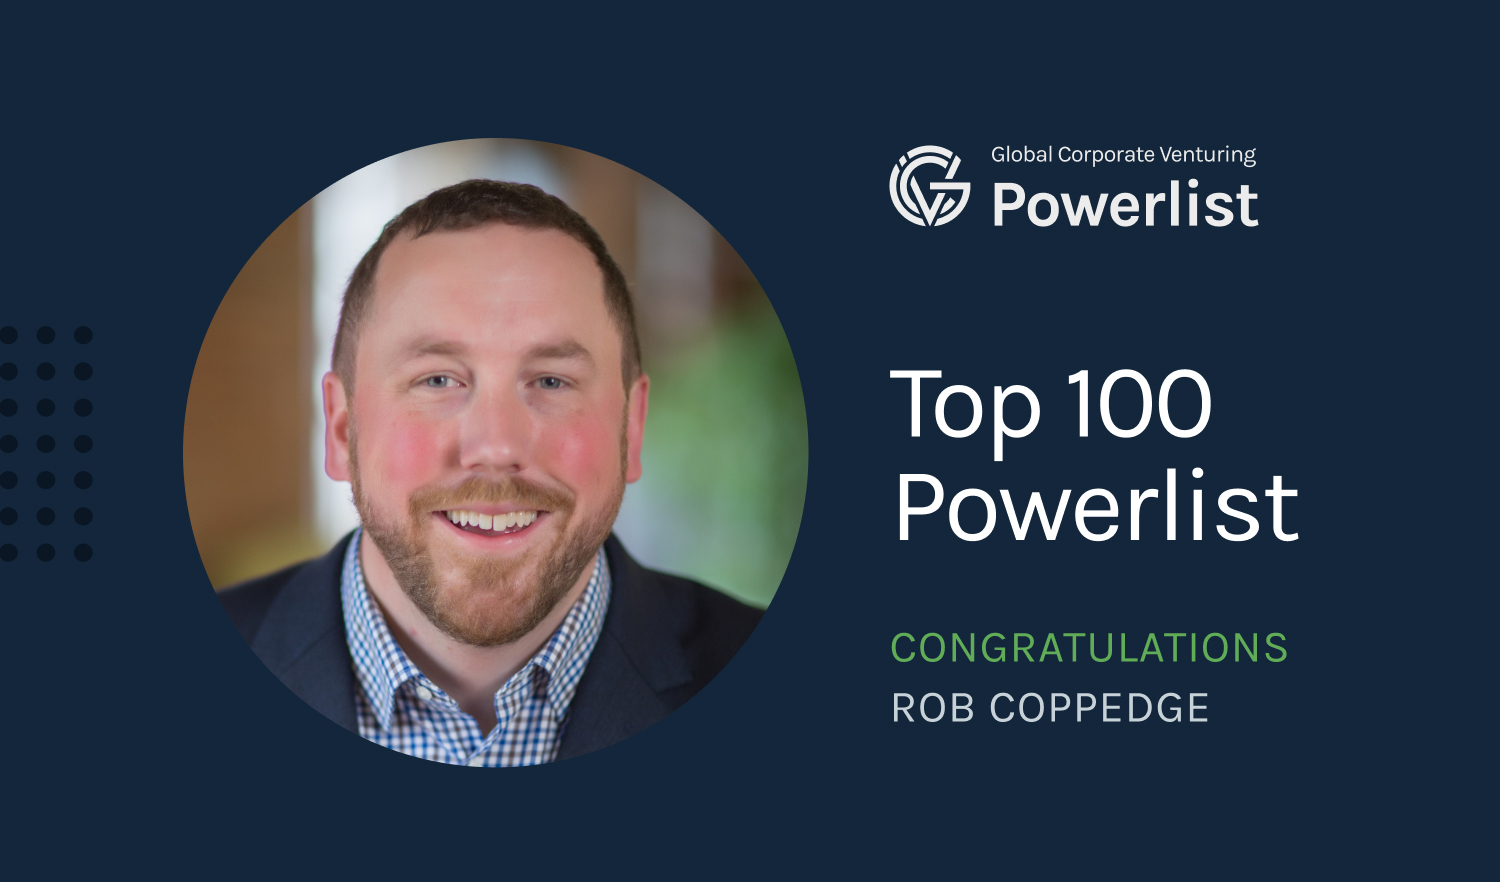 Global Corporate Venturing Powerlist - Top 100 - Rob Coppedge